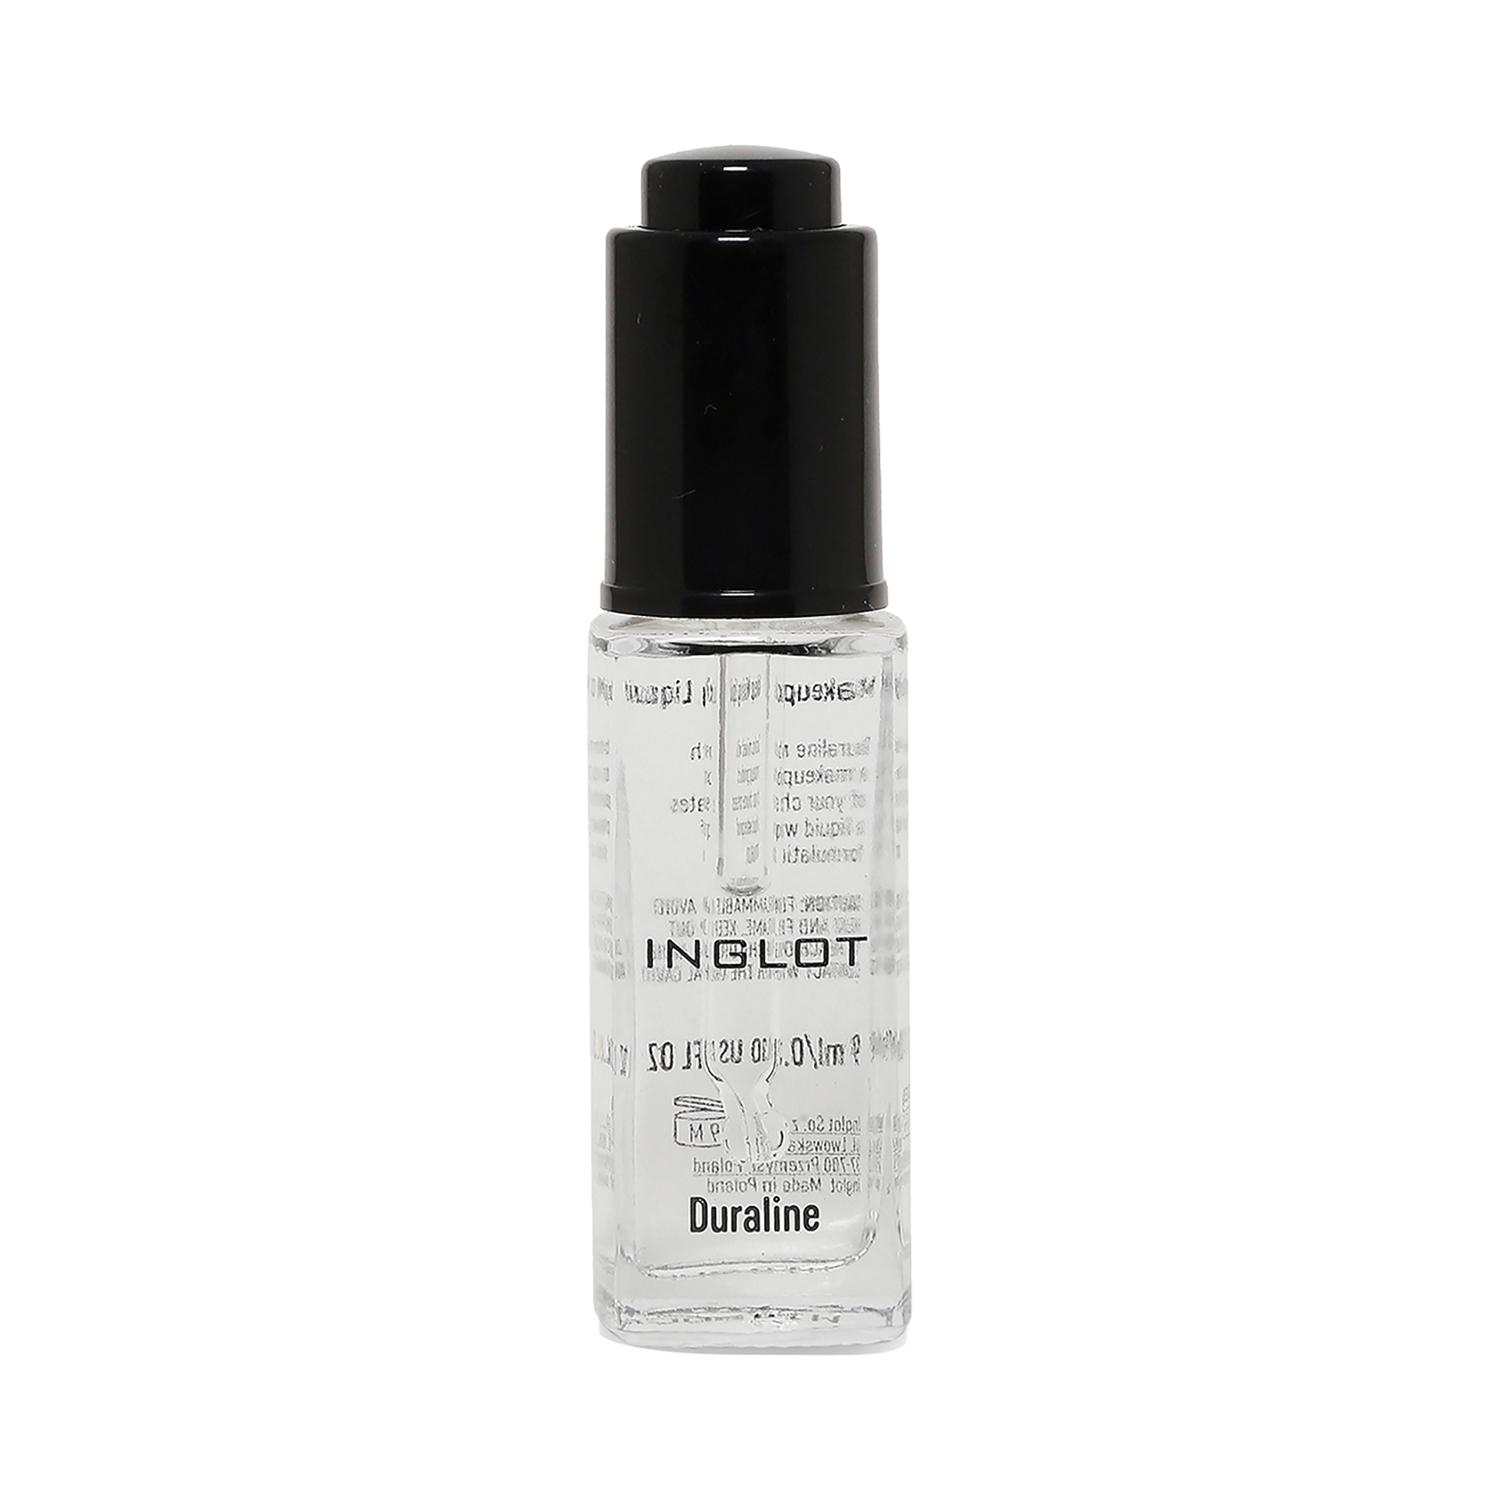 inglot inglot duraline makeup mixing liquid - clear (9ml)